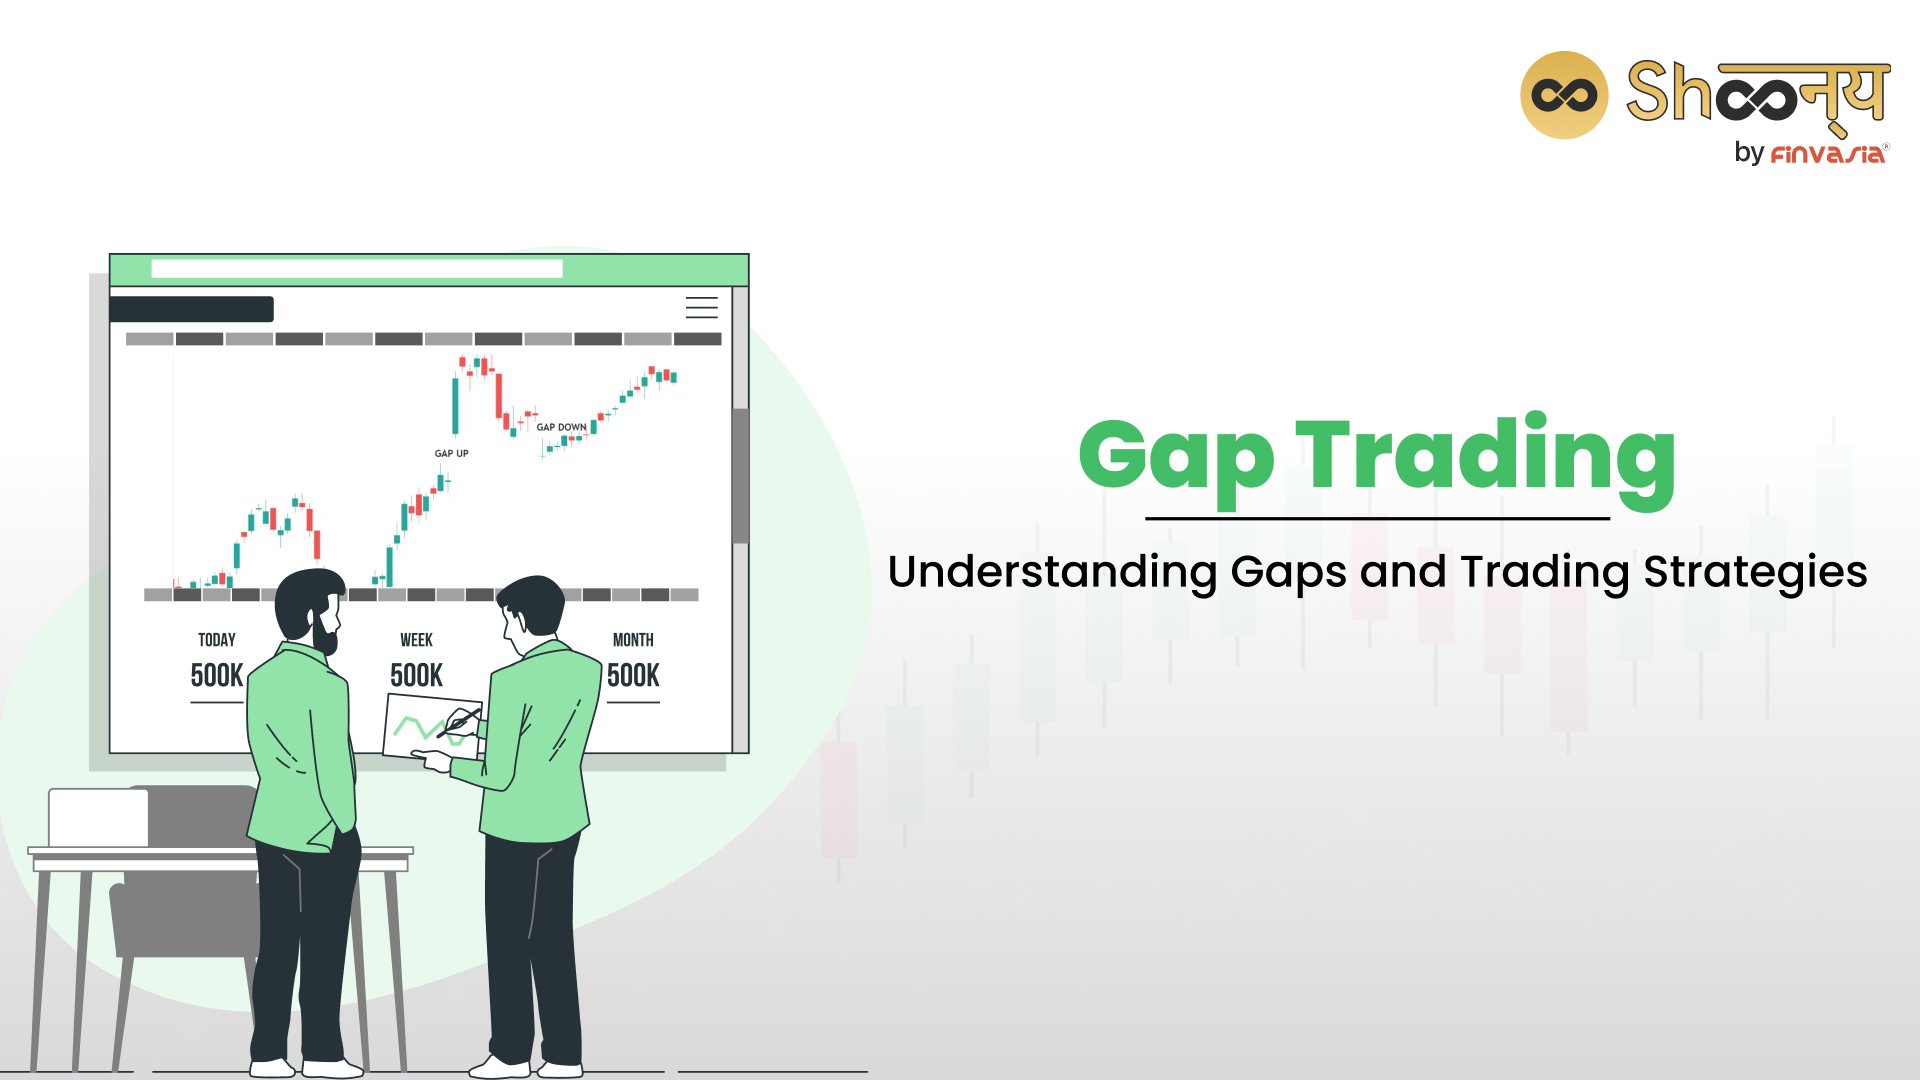 Gap Trading: Understanding Gaps and Trading Strategies